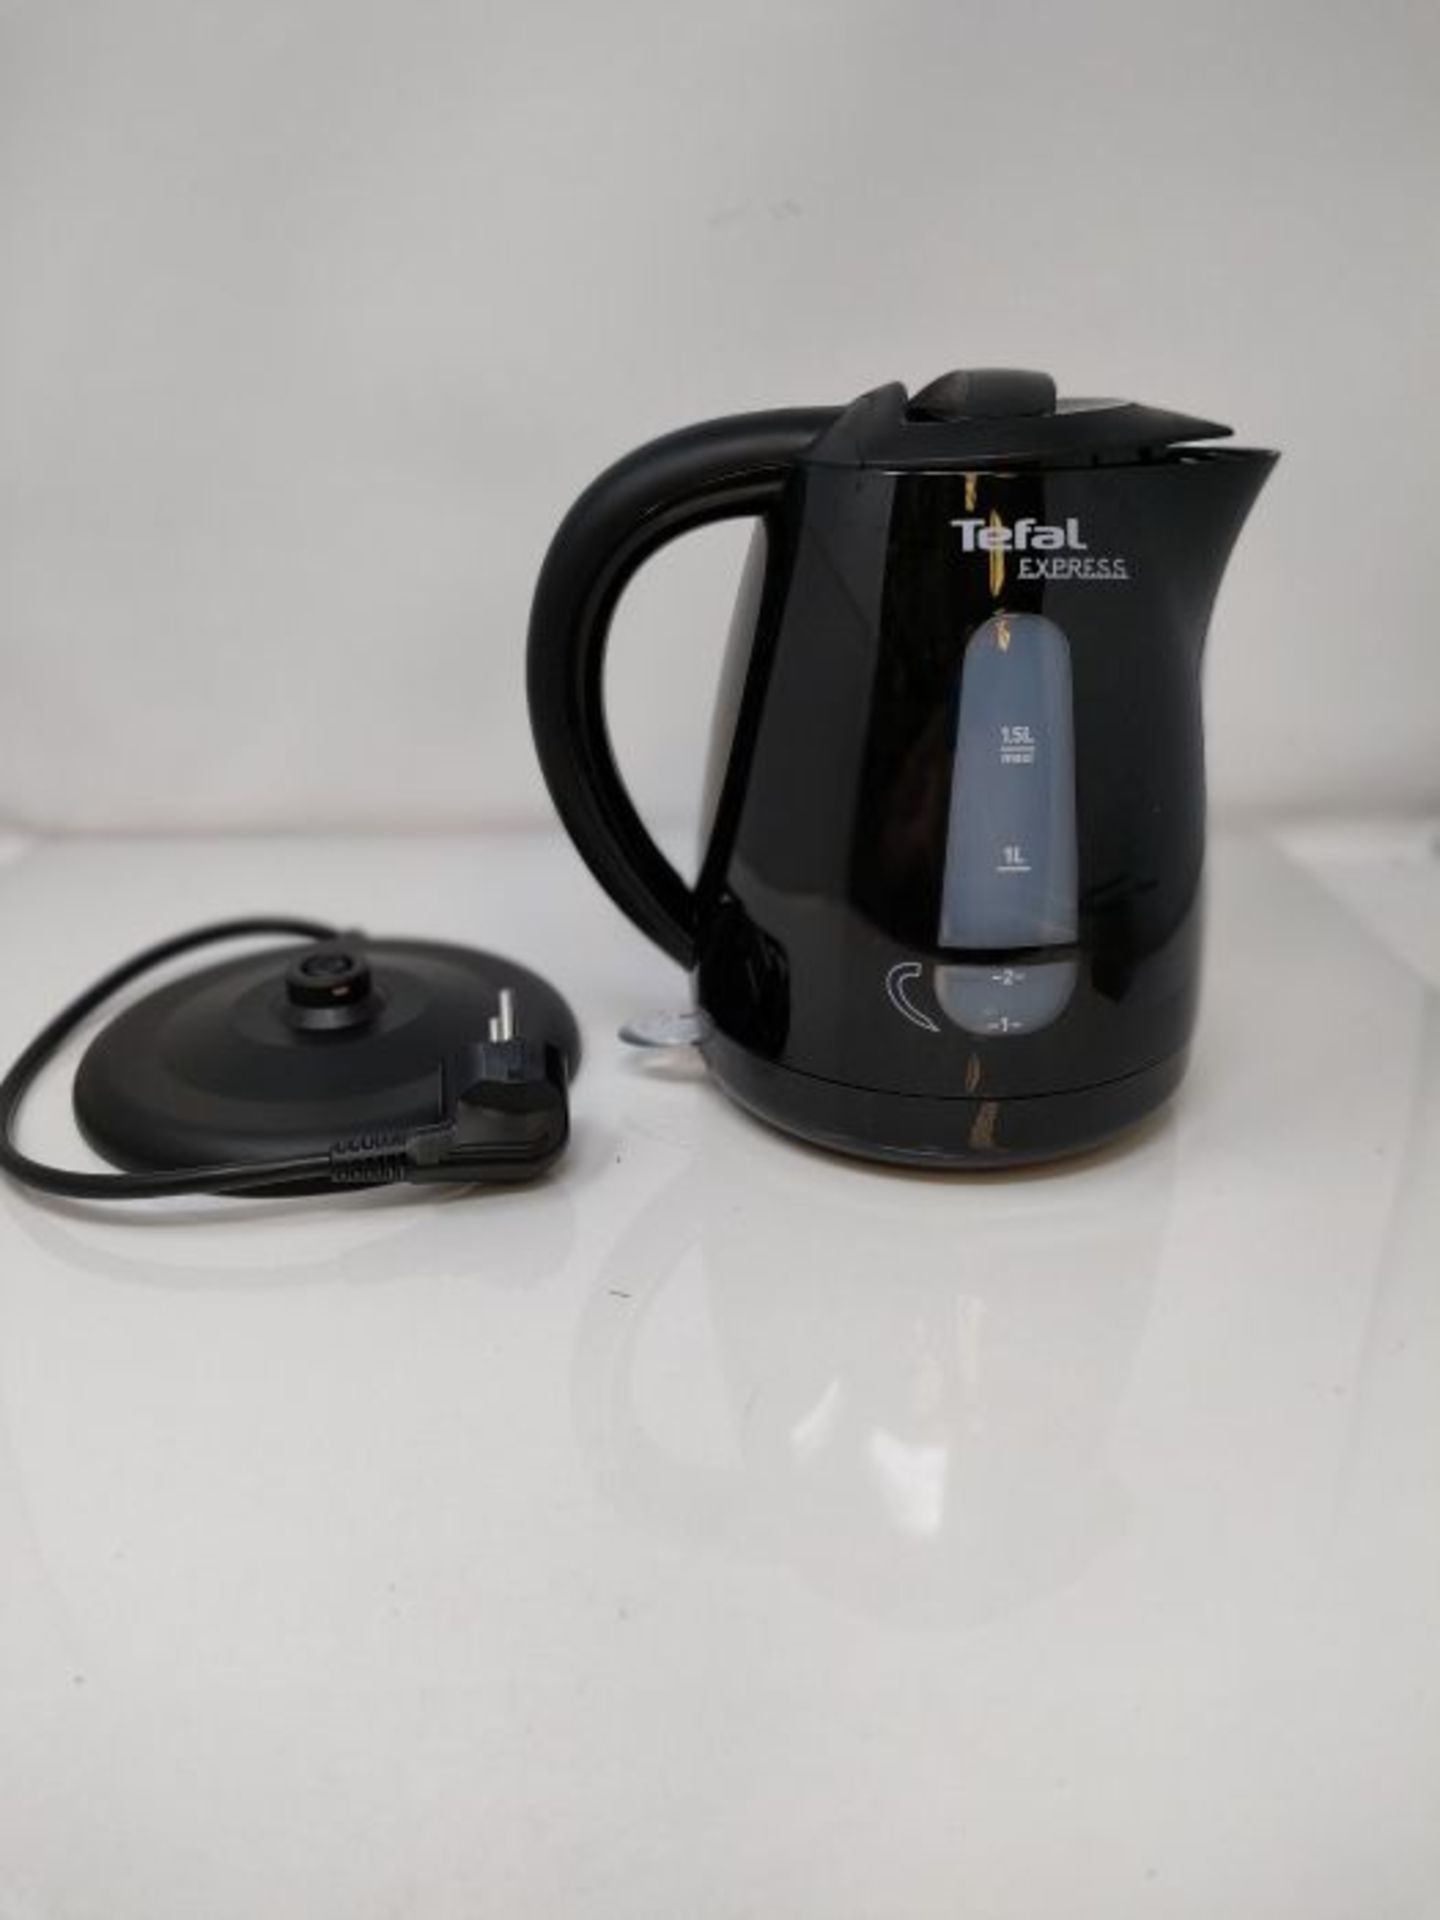 Tefal Express Eco KO2998 electric kettle 1.5 L Black 2400 W Express Eco KO2998, 1.5 L, - Image 3 of 3